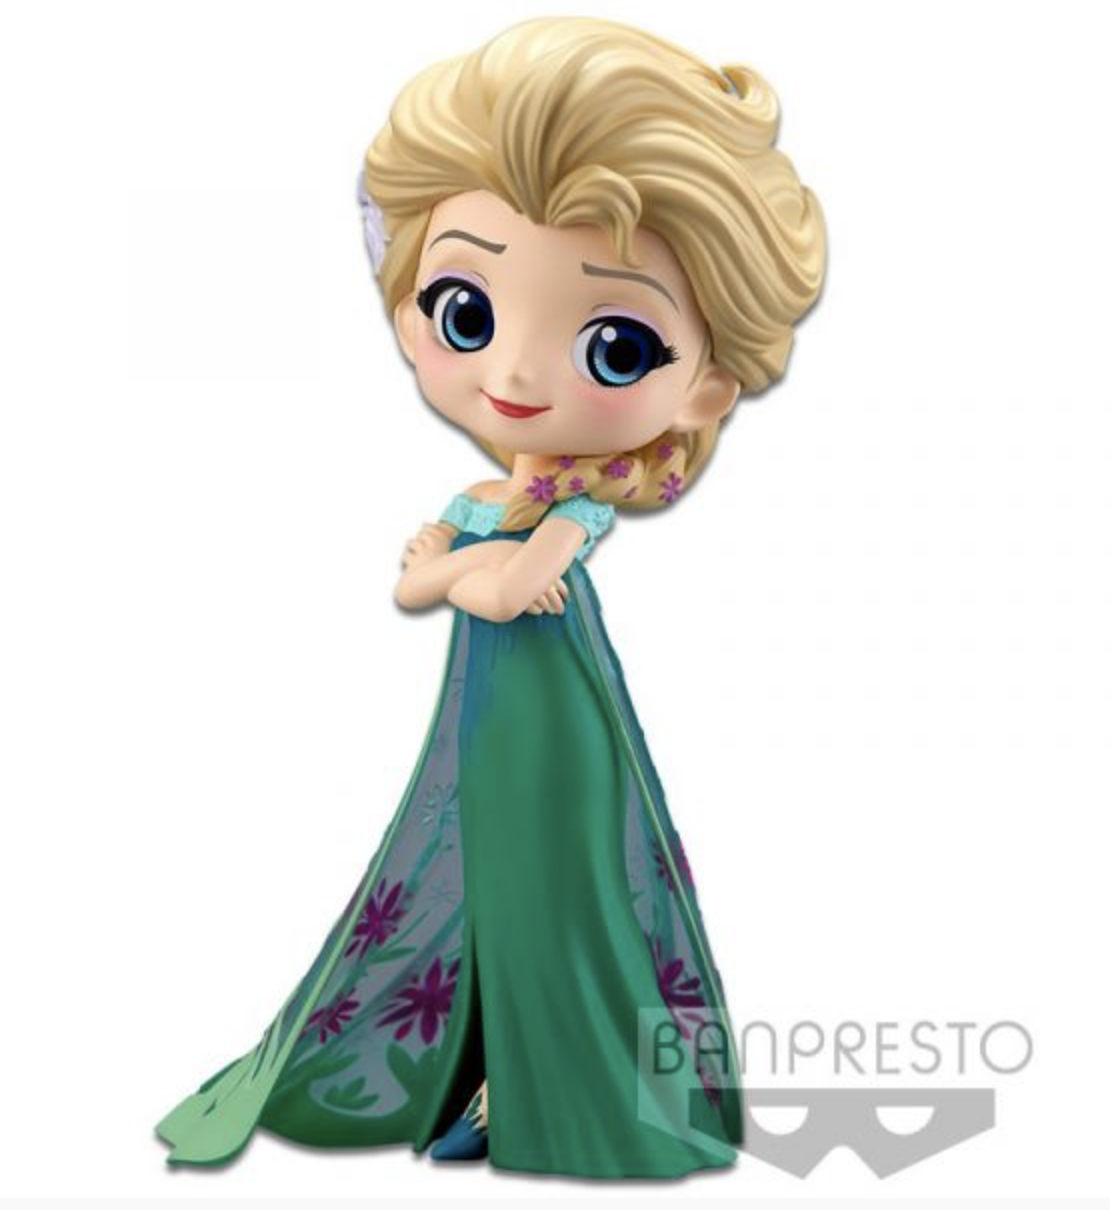 La reine des neiges - Q Posket : Figurine Elsa Disney Frozen Fever